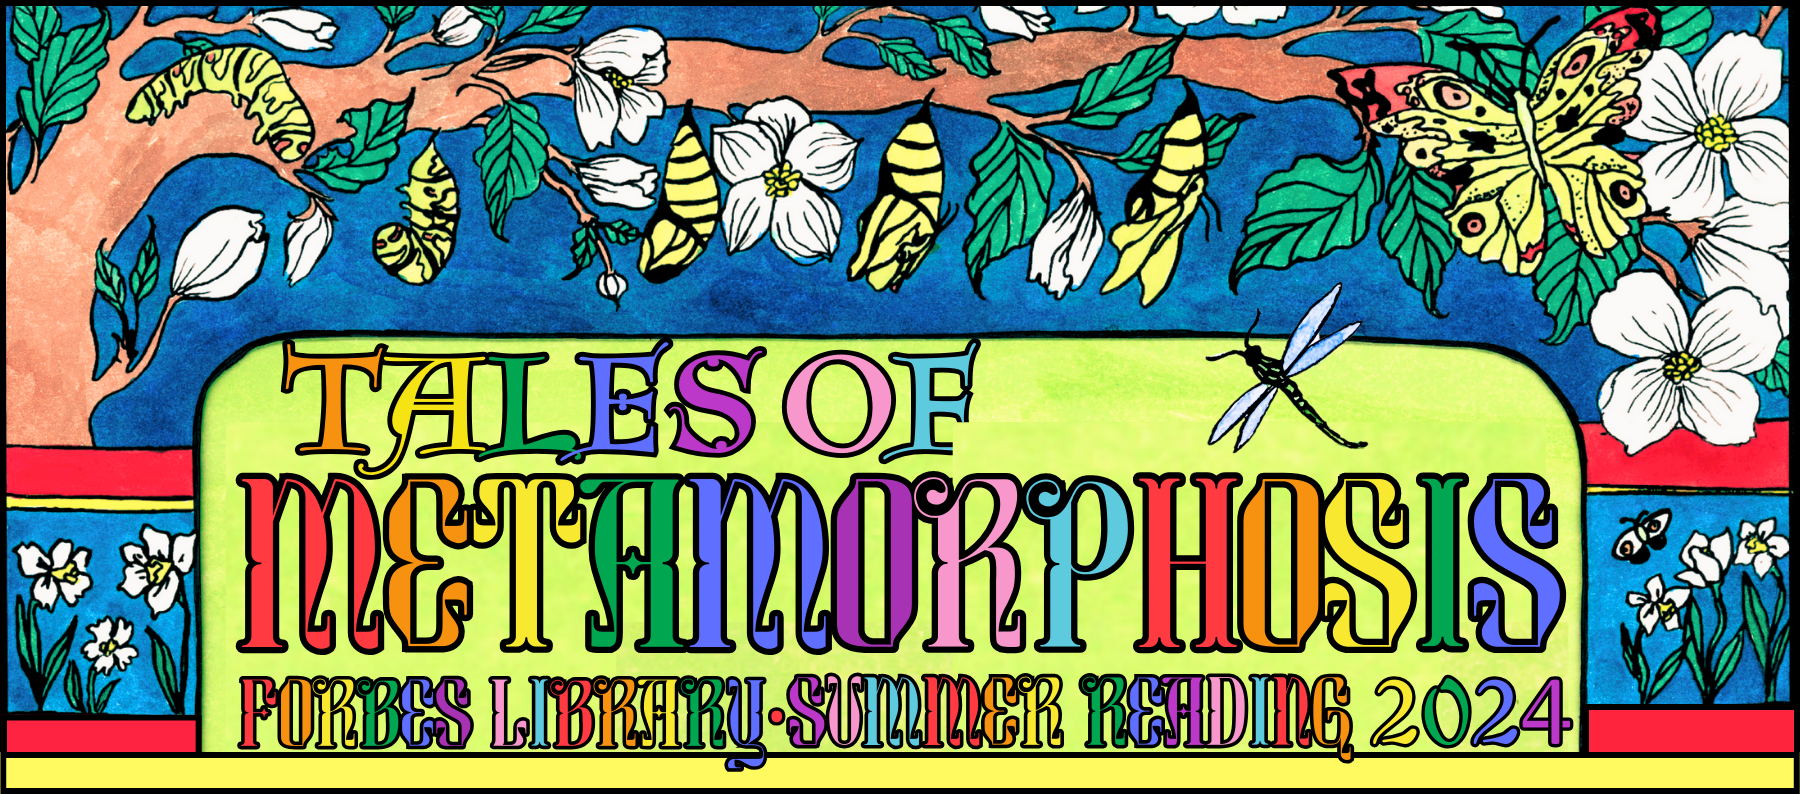 Tales of Metamorphosis: Forbes Library Summer Reading 2024